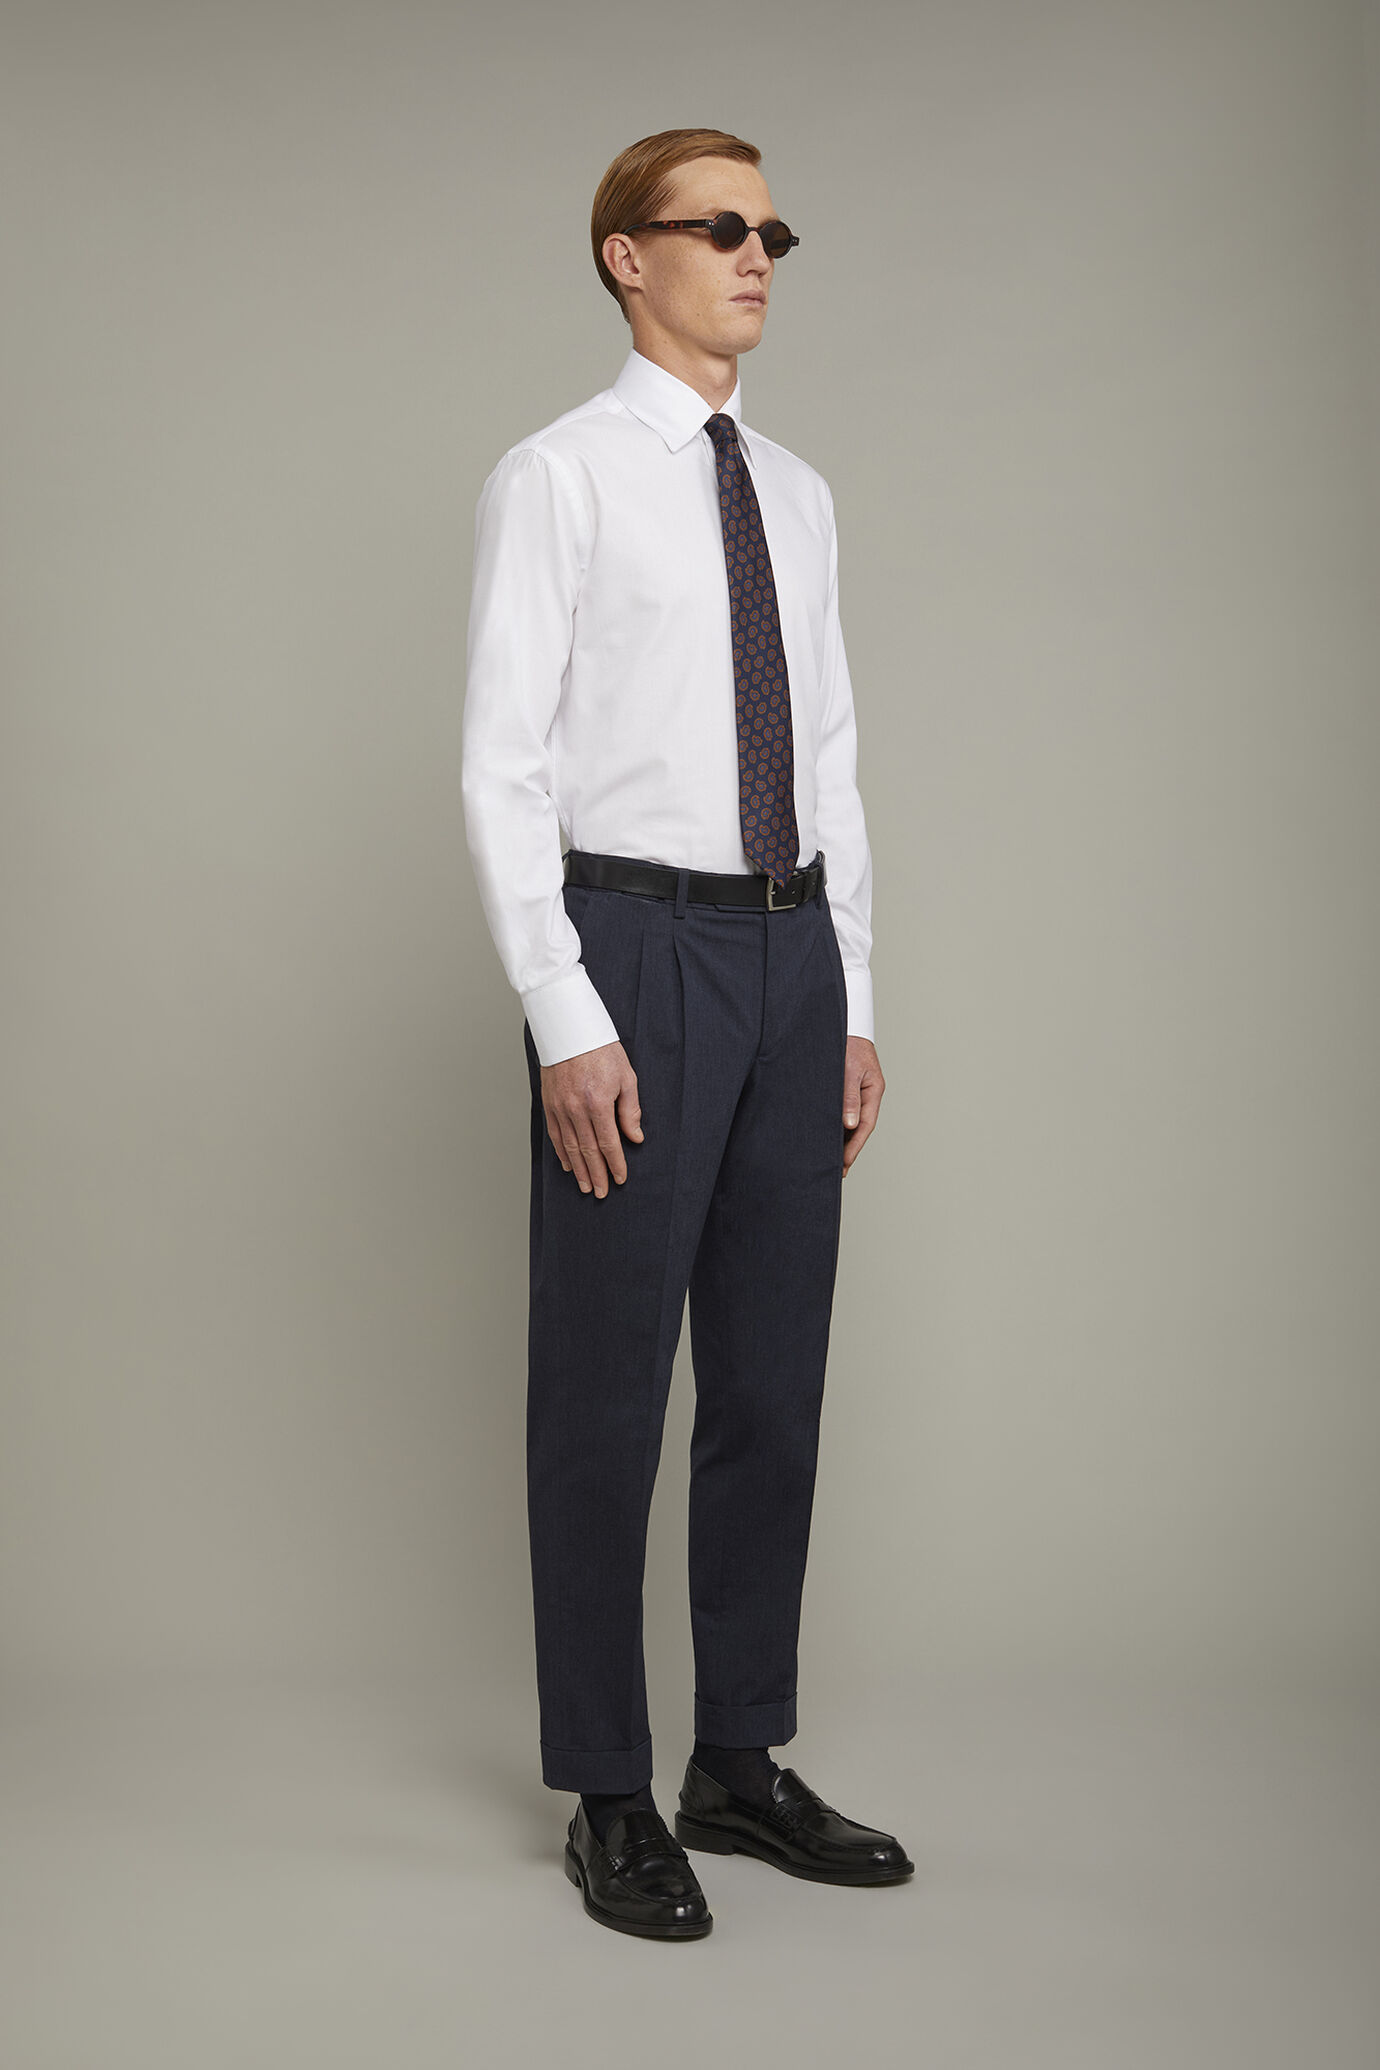 Men's shirt classic collar 100% cotton herringbone fabric plain regular fit image number 1